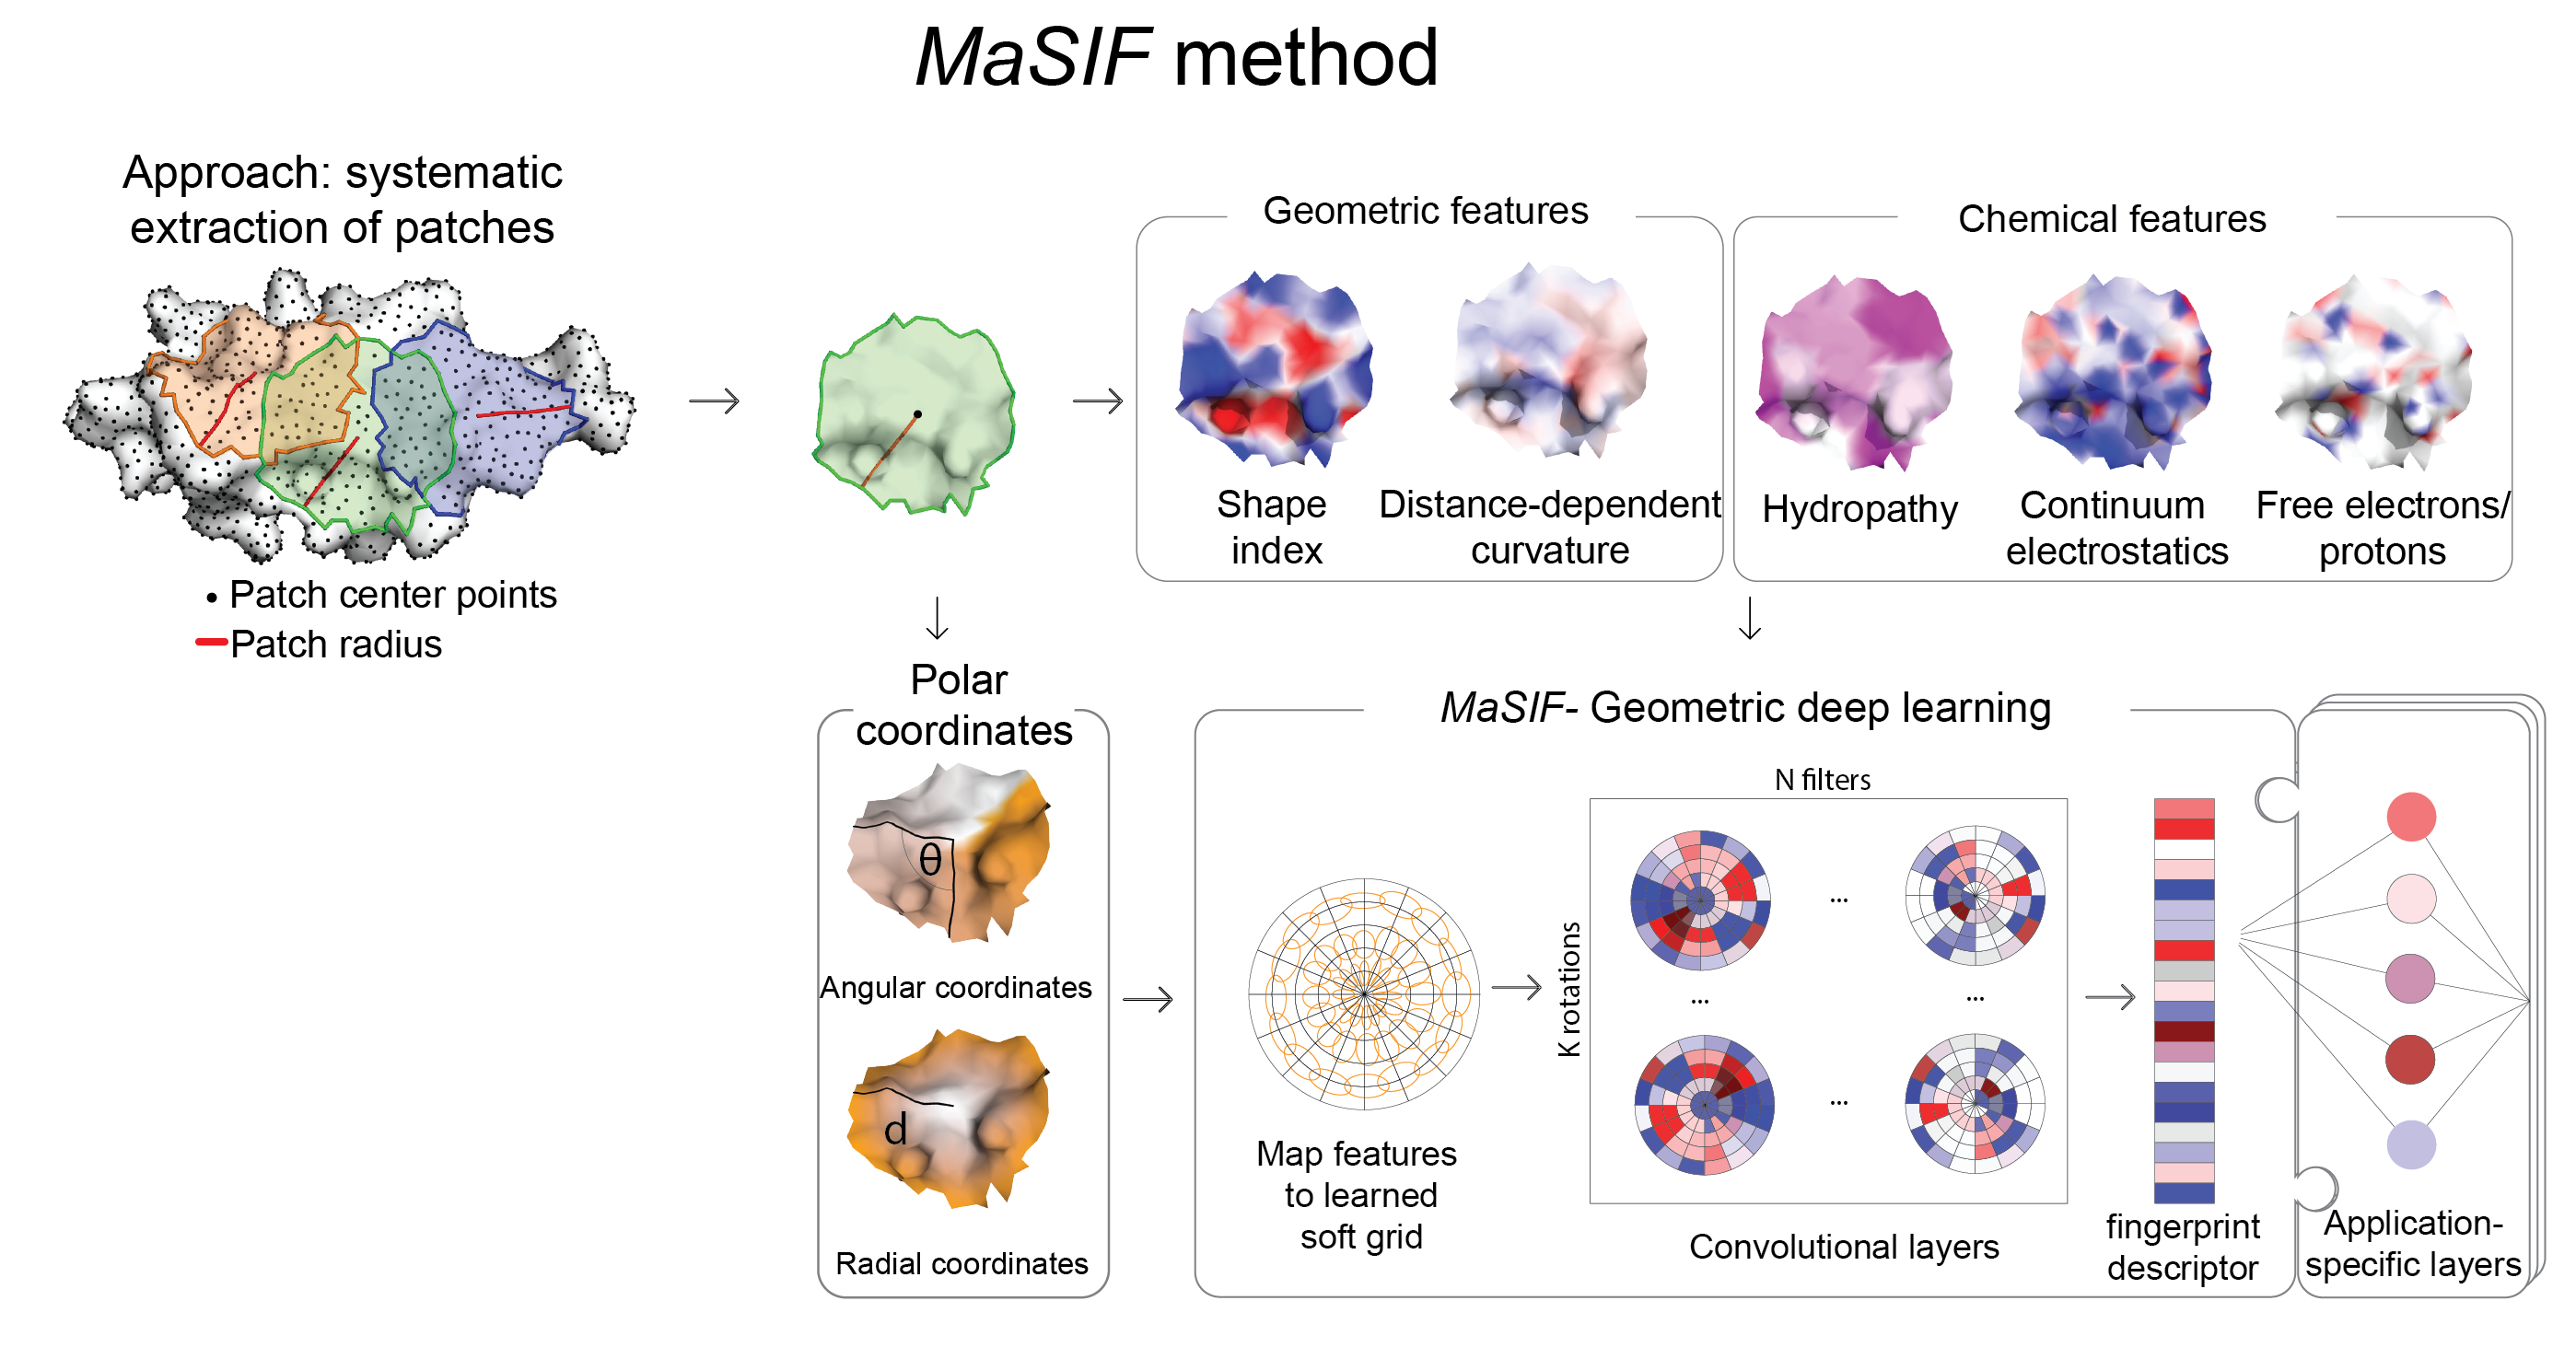 MaSIF conceptual framework and method